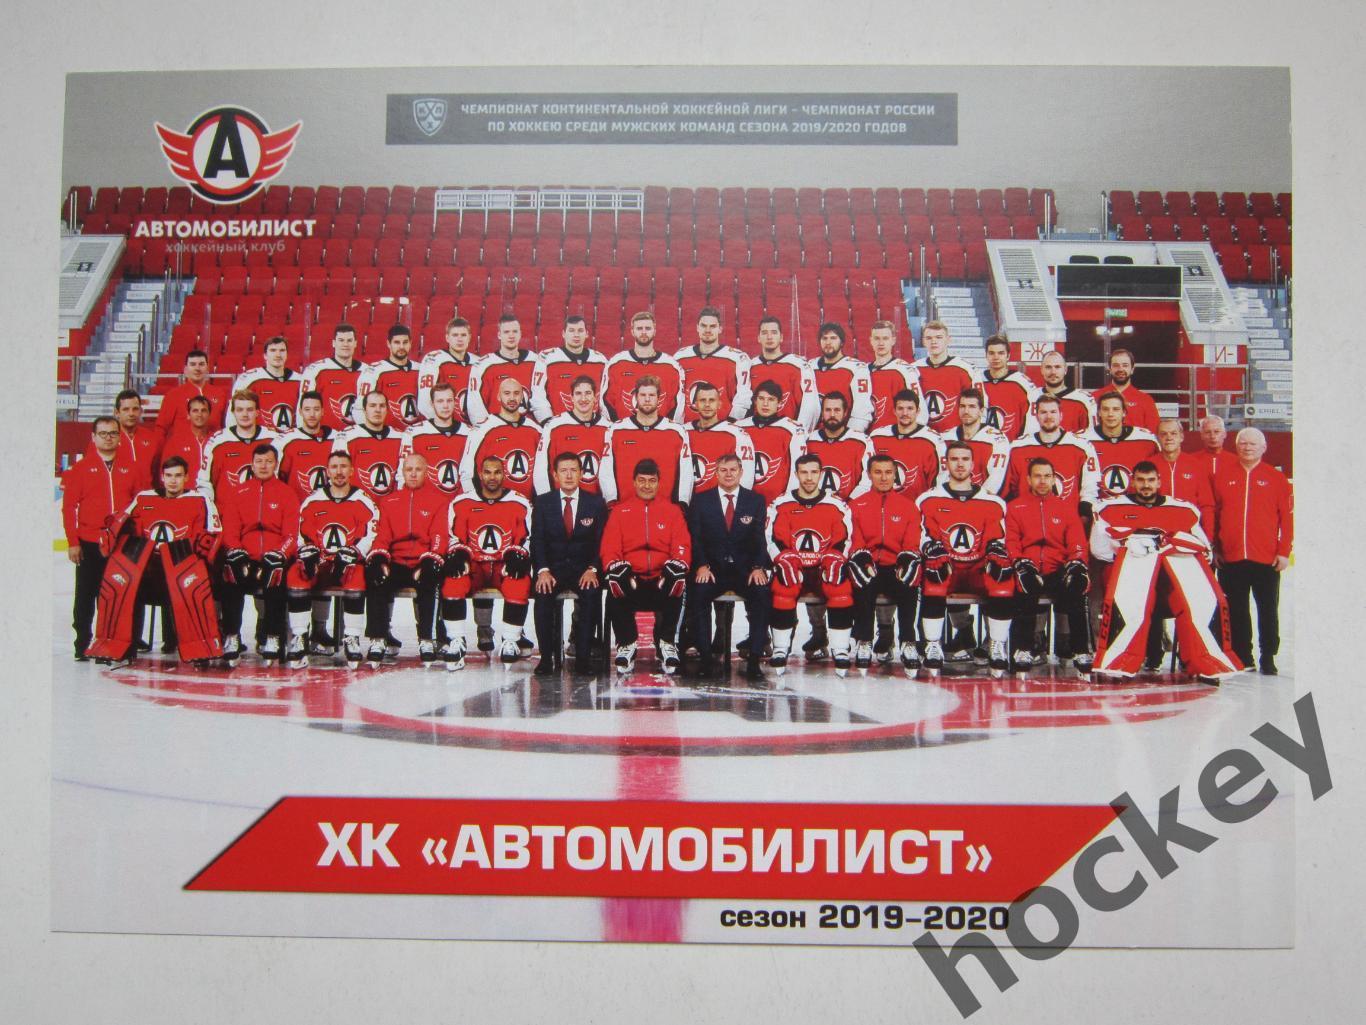 ХК Автомобилист (Екатеринбург) - 2019/2020. Фото-открытка (размер 15 на 20 см)